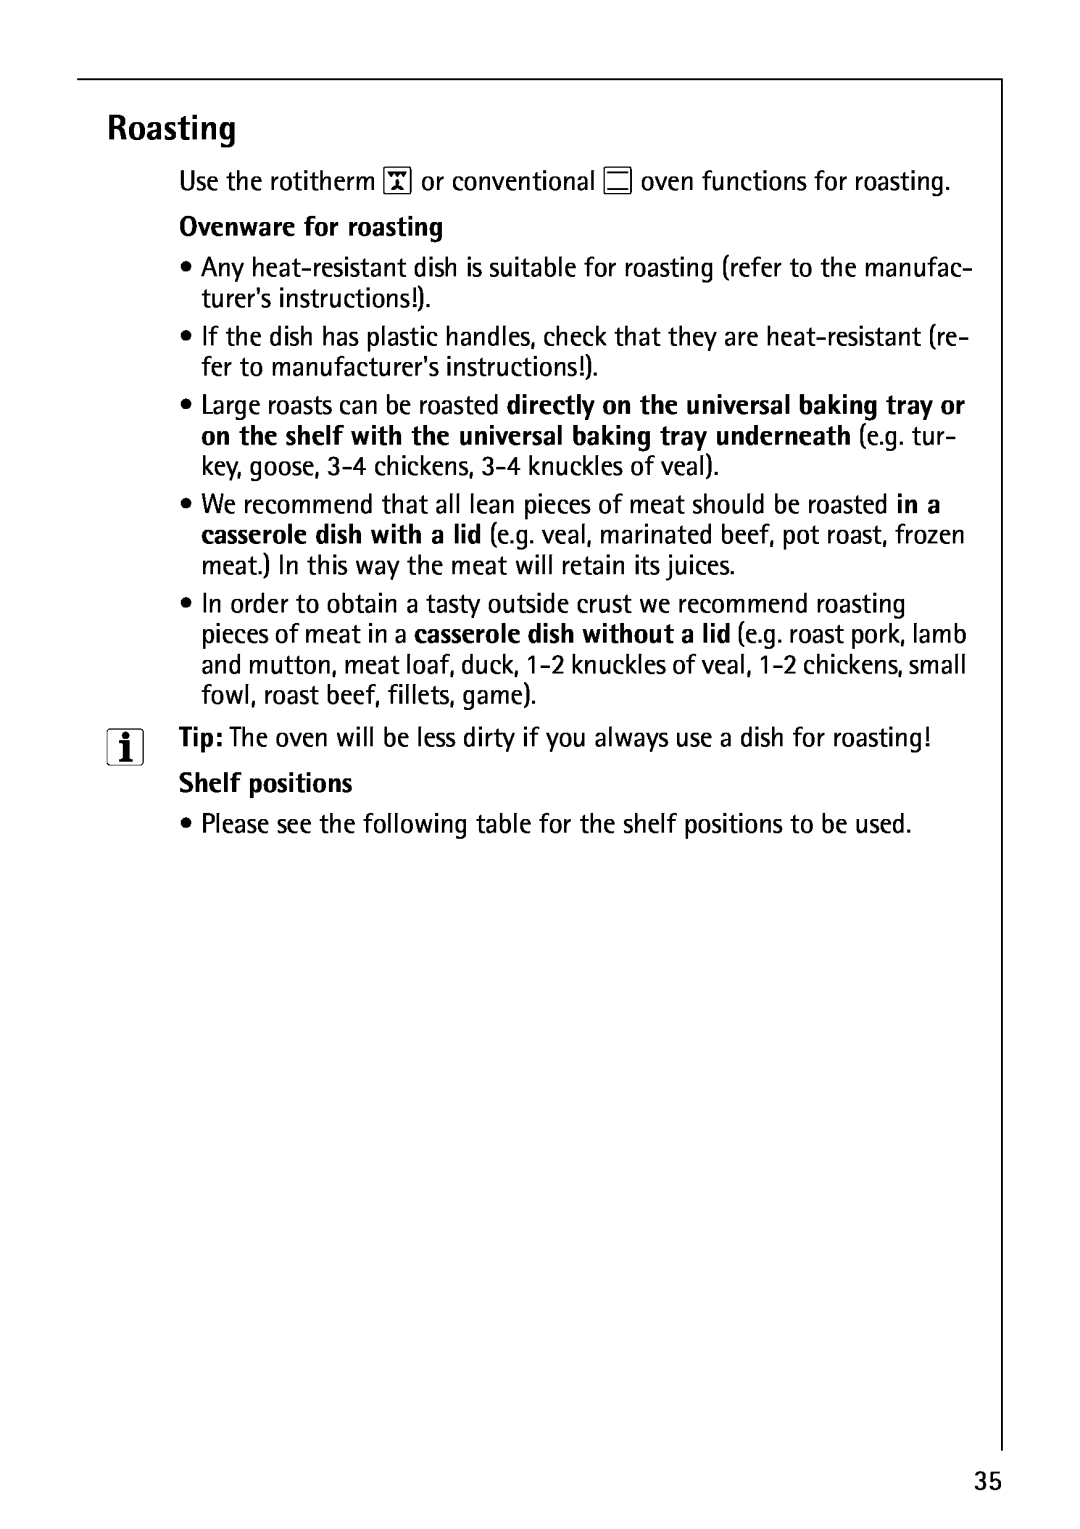 AEG B4130-1 operating instructions Roasting, Ovenware for roasting, Shelf positions 